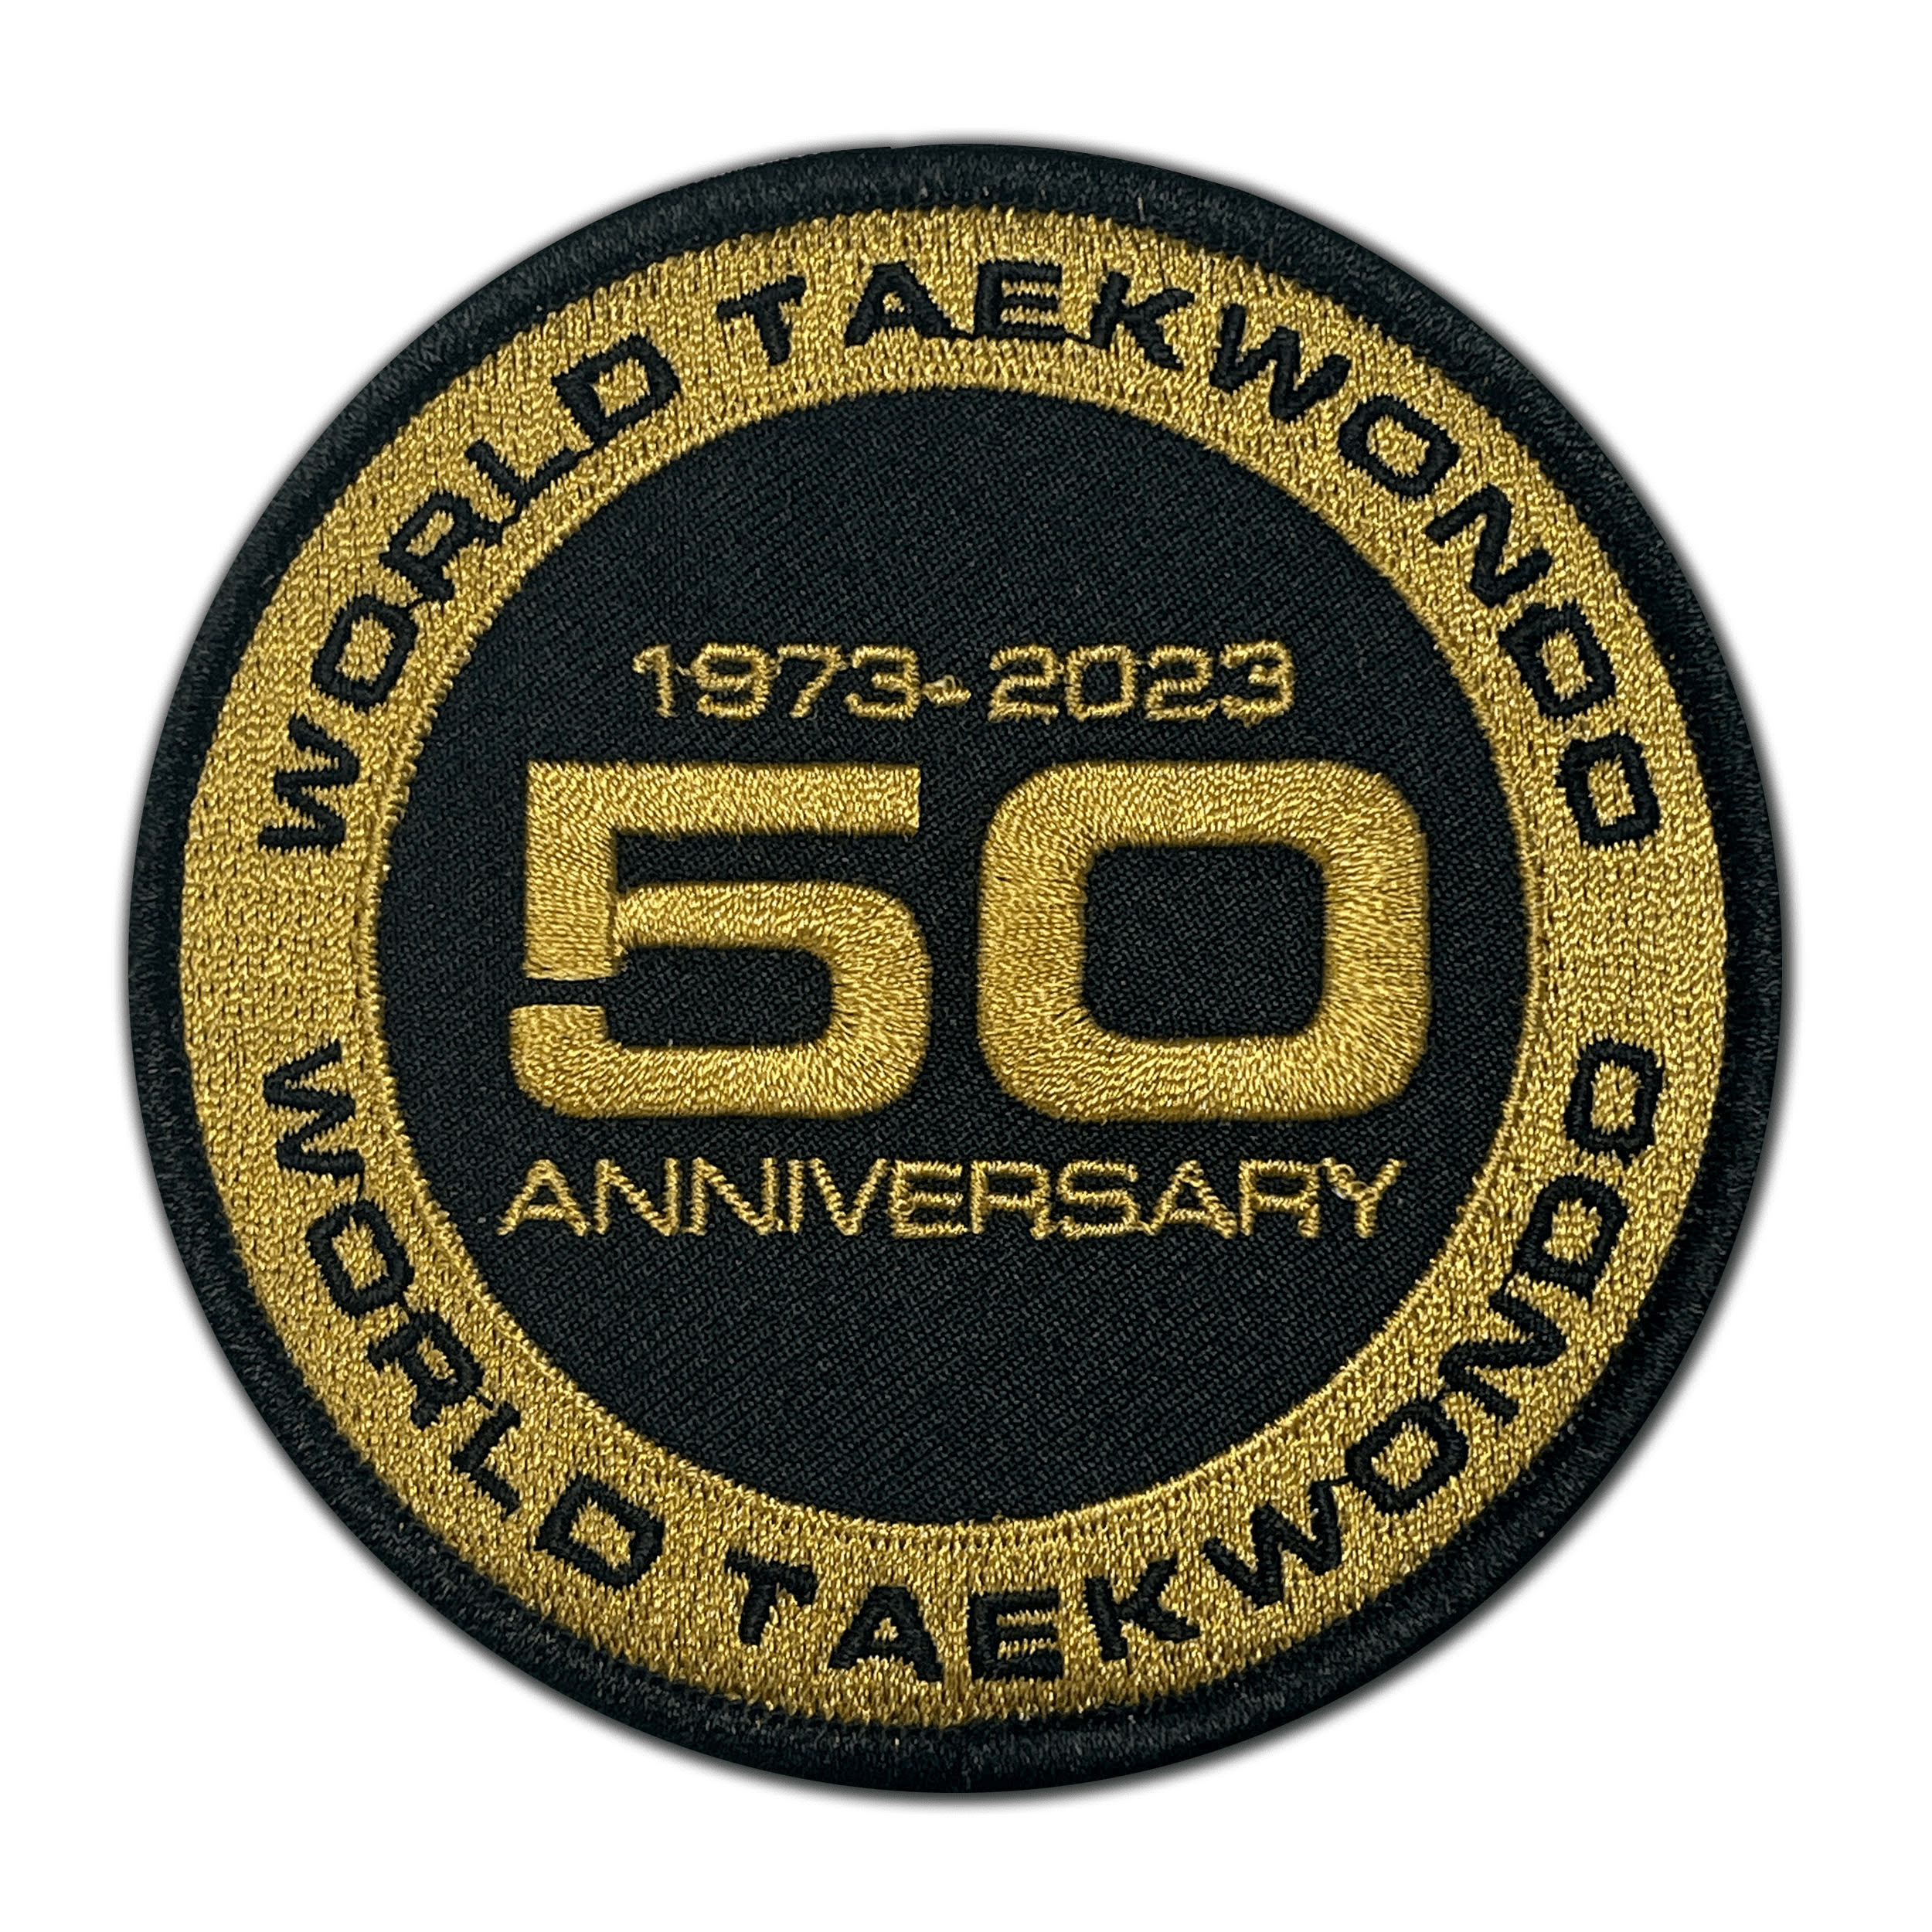 WORLD TAEKWONDO 50TH ANNIVERSARY PATCH